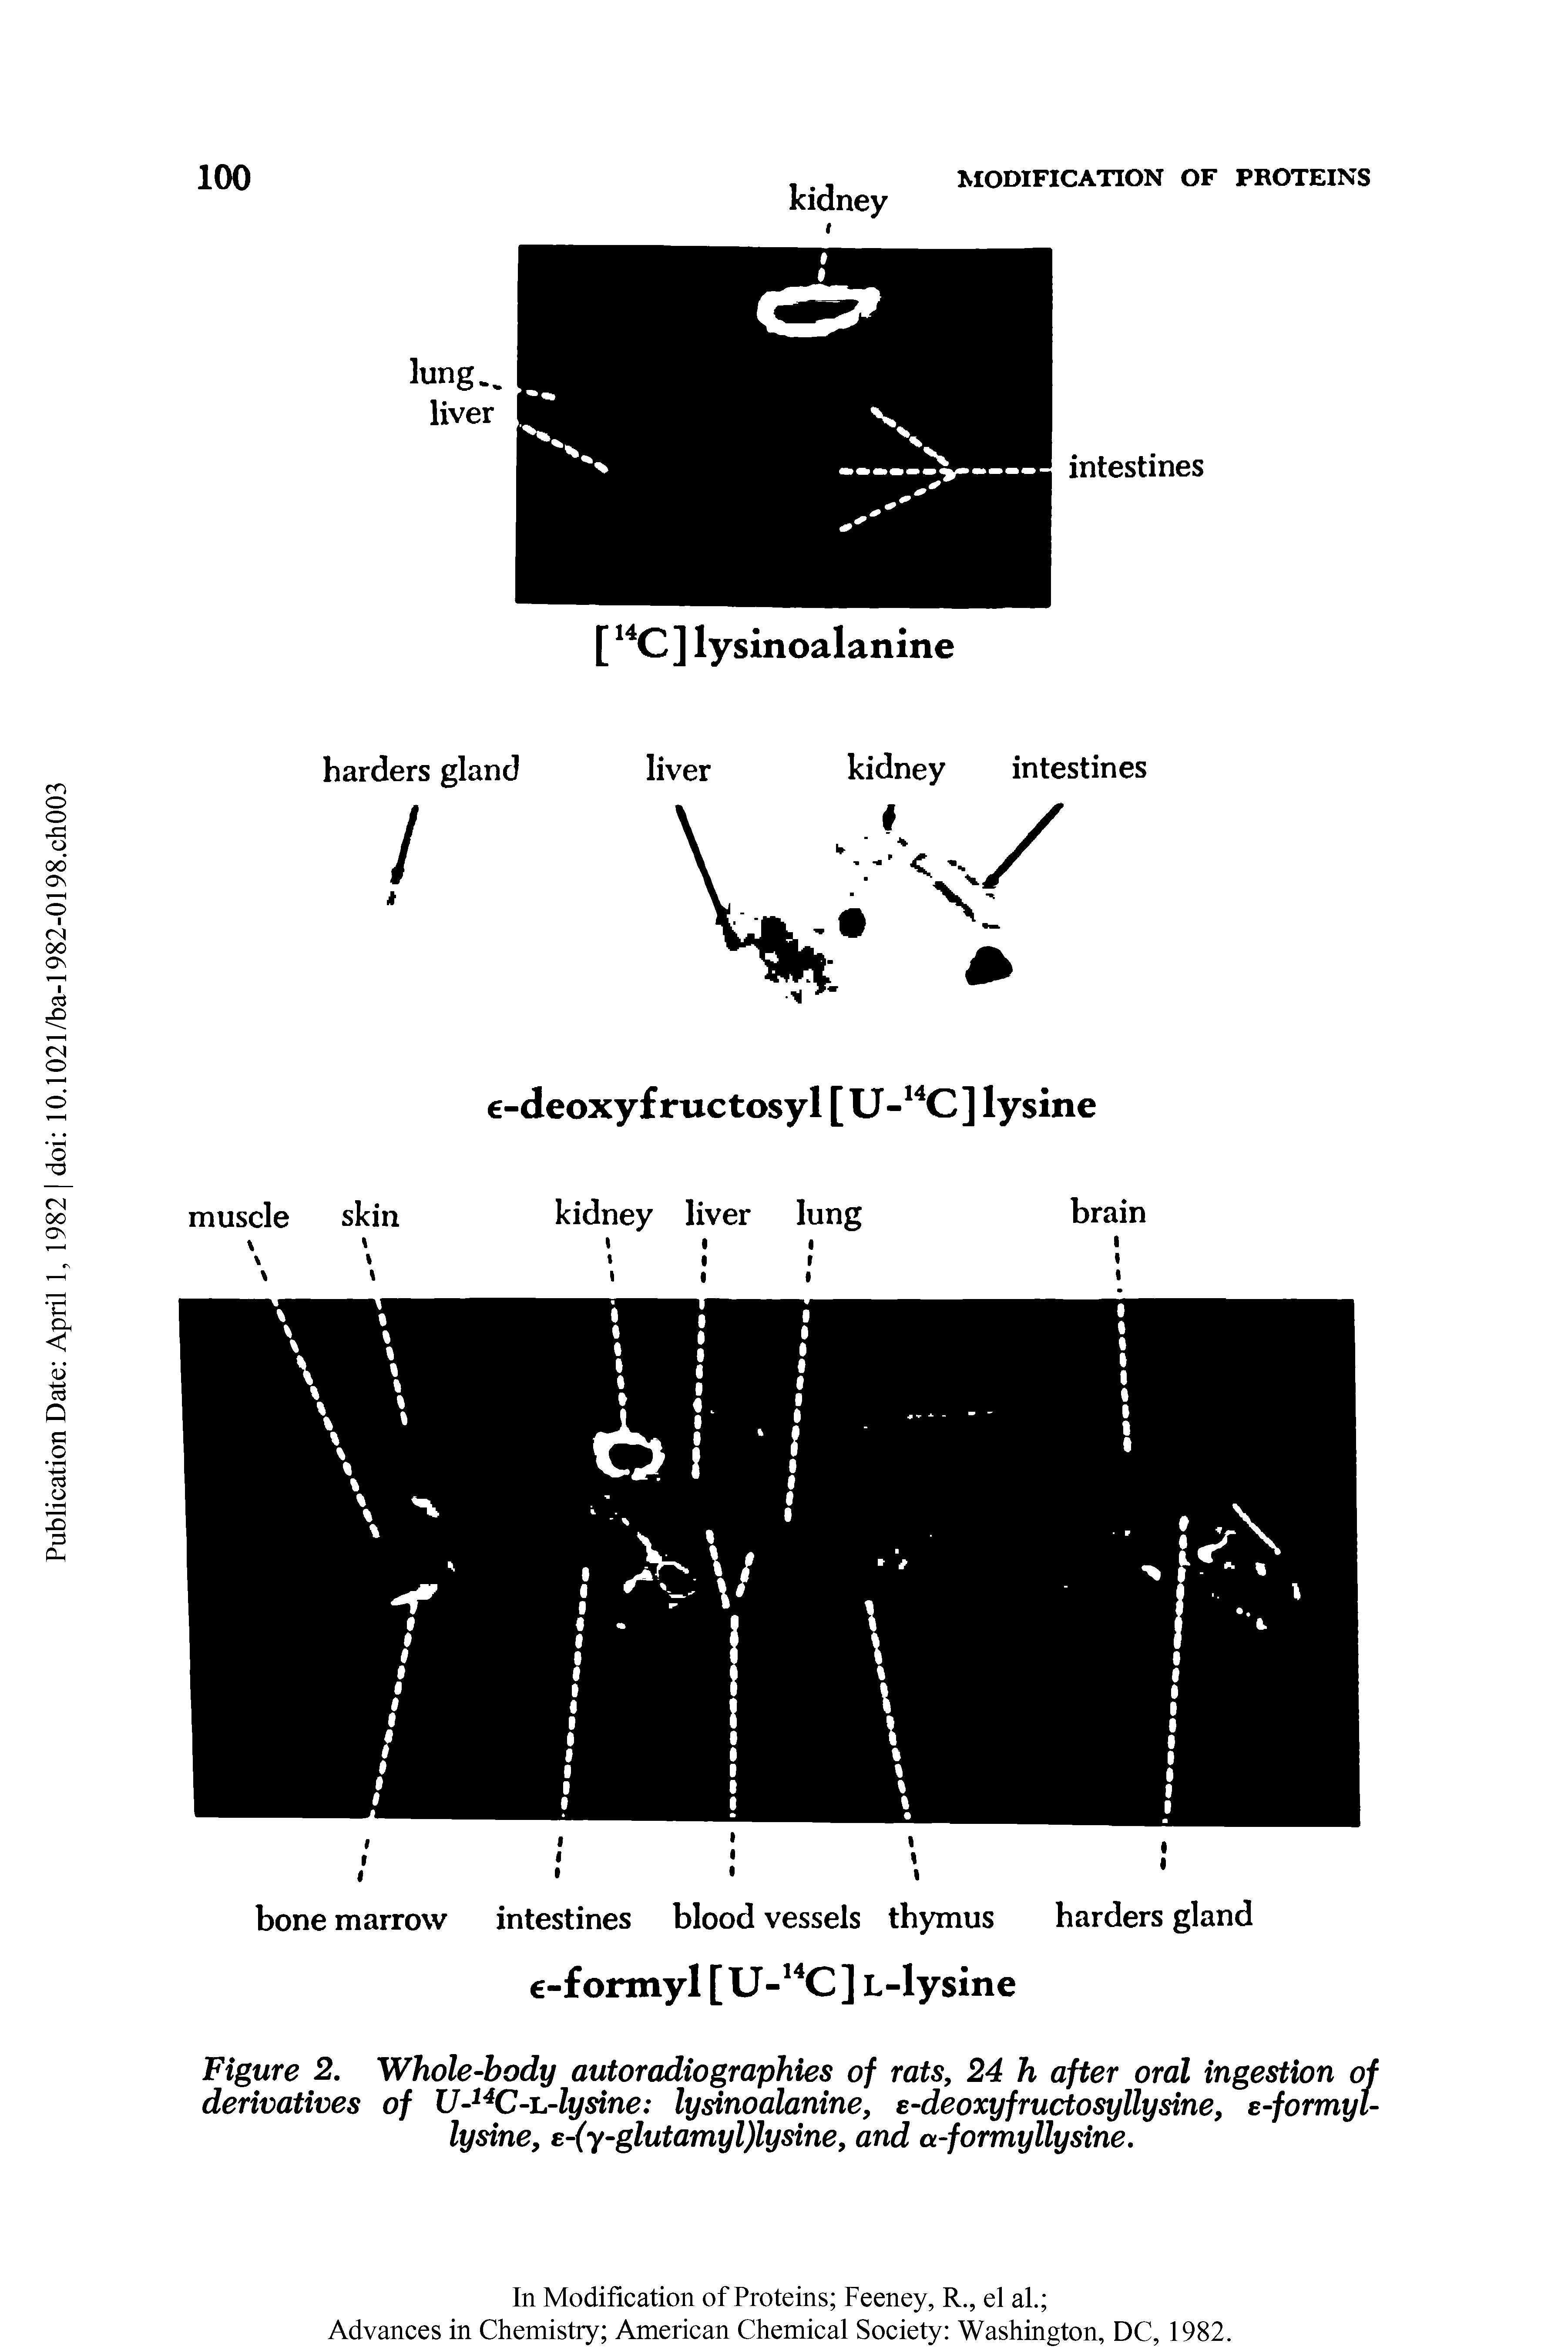 Figure 2. Whole-body autoradiographies of rats, 24 h after oral ingestion of derivatives of U-14C-i.-lysine lysinoalanine, e-deoxyfructosyllysine, e-formyl-lysine, e-(y-glutamyl)lysine, and a-formyllysine.